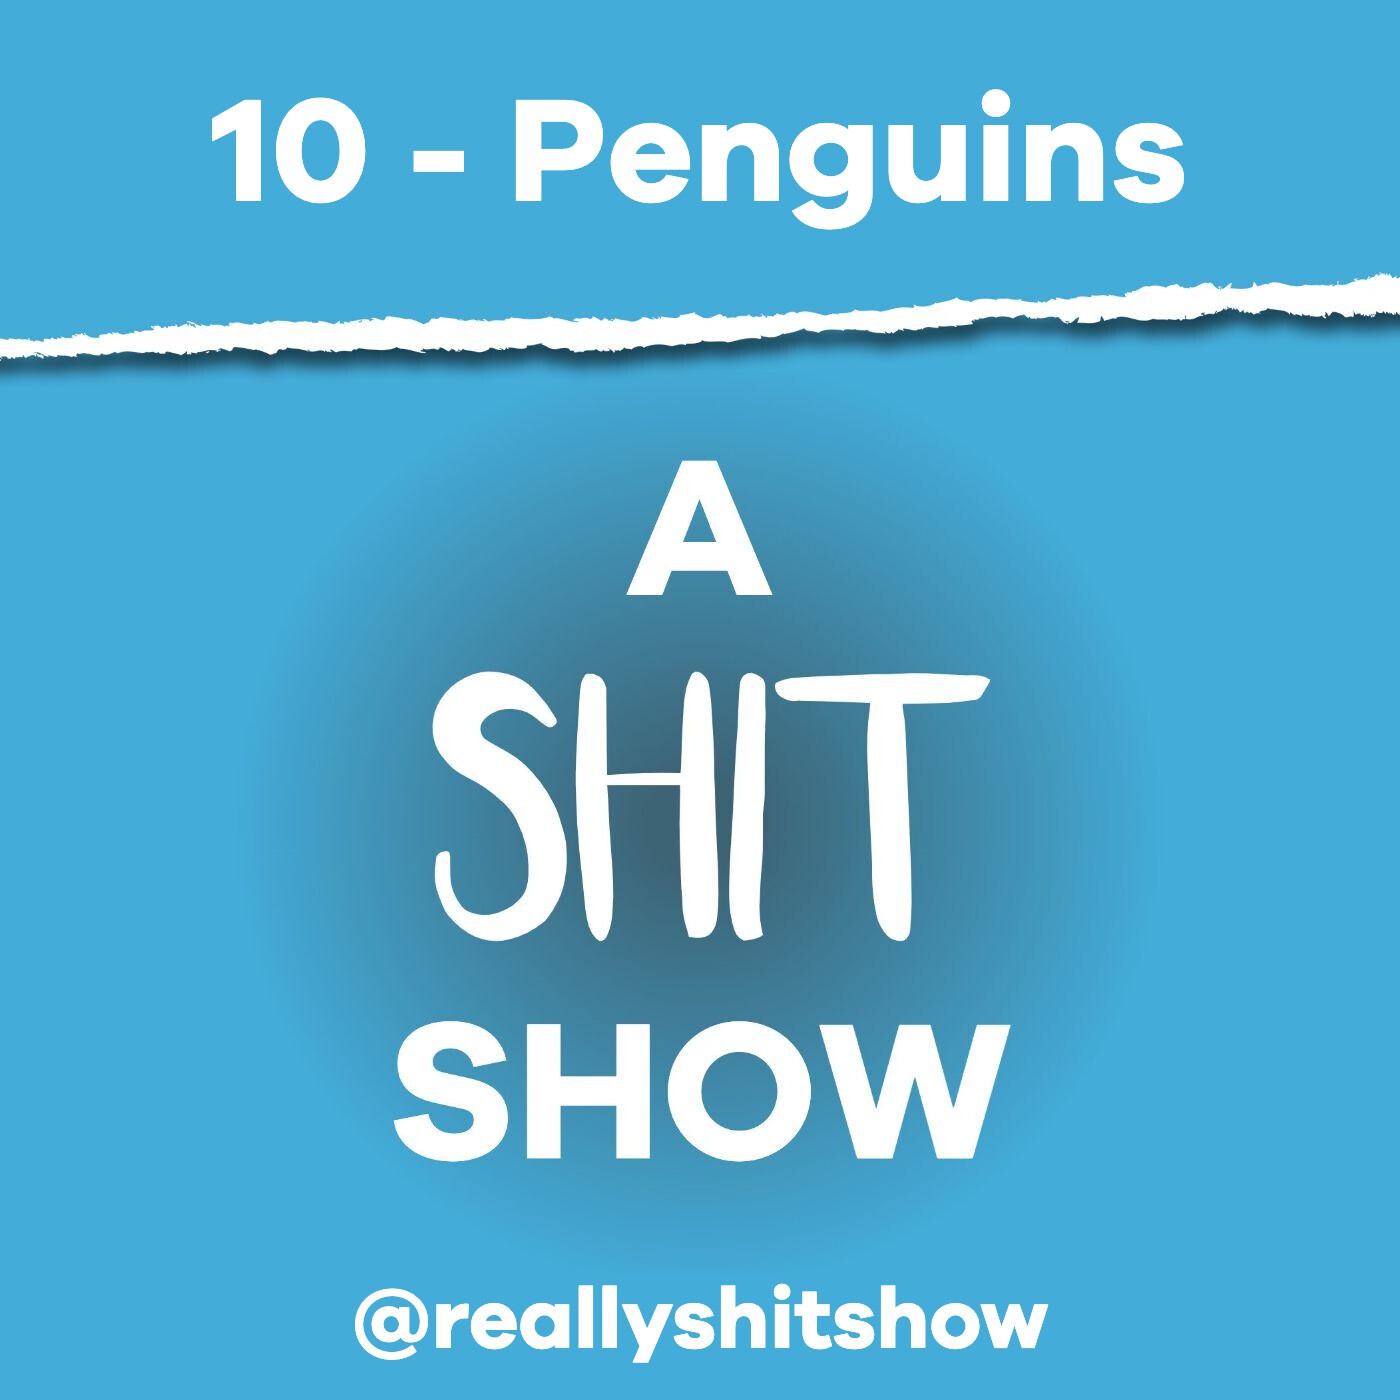 10 - Penguins